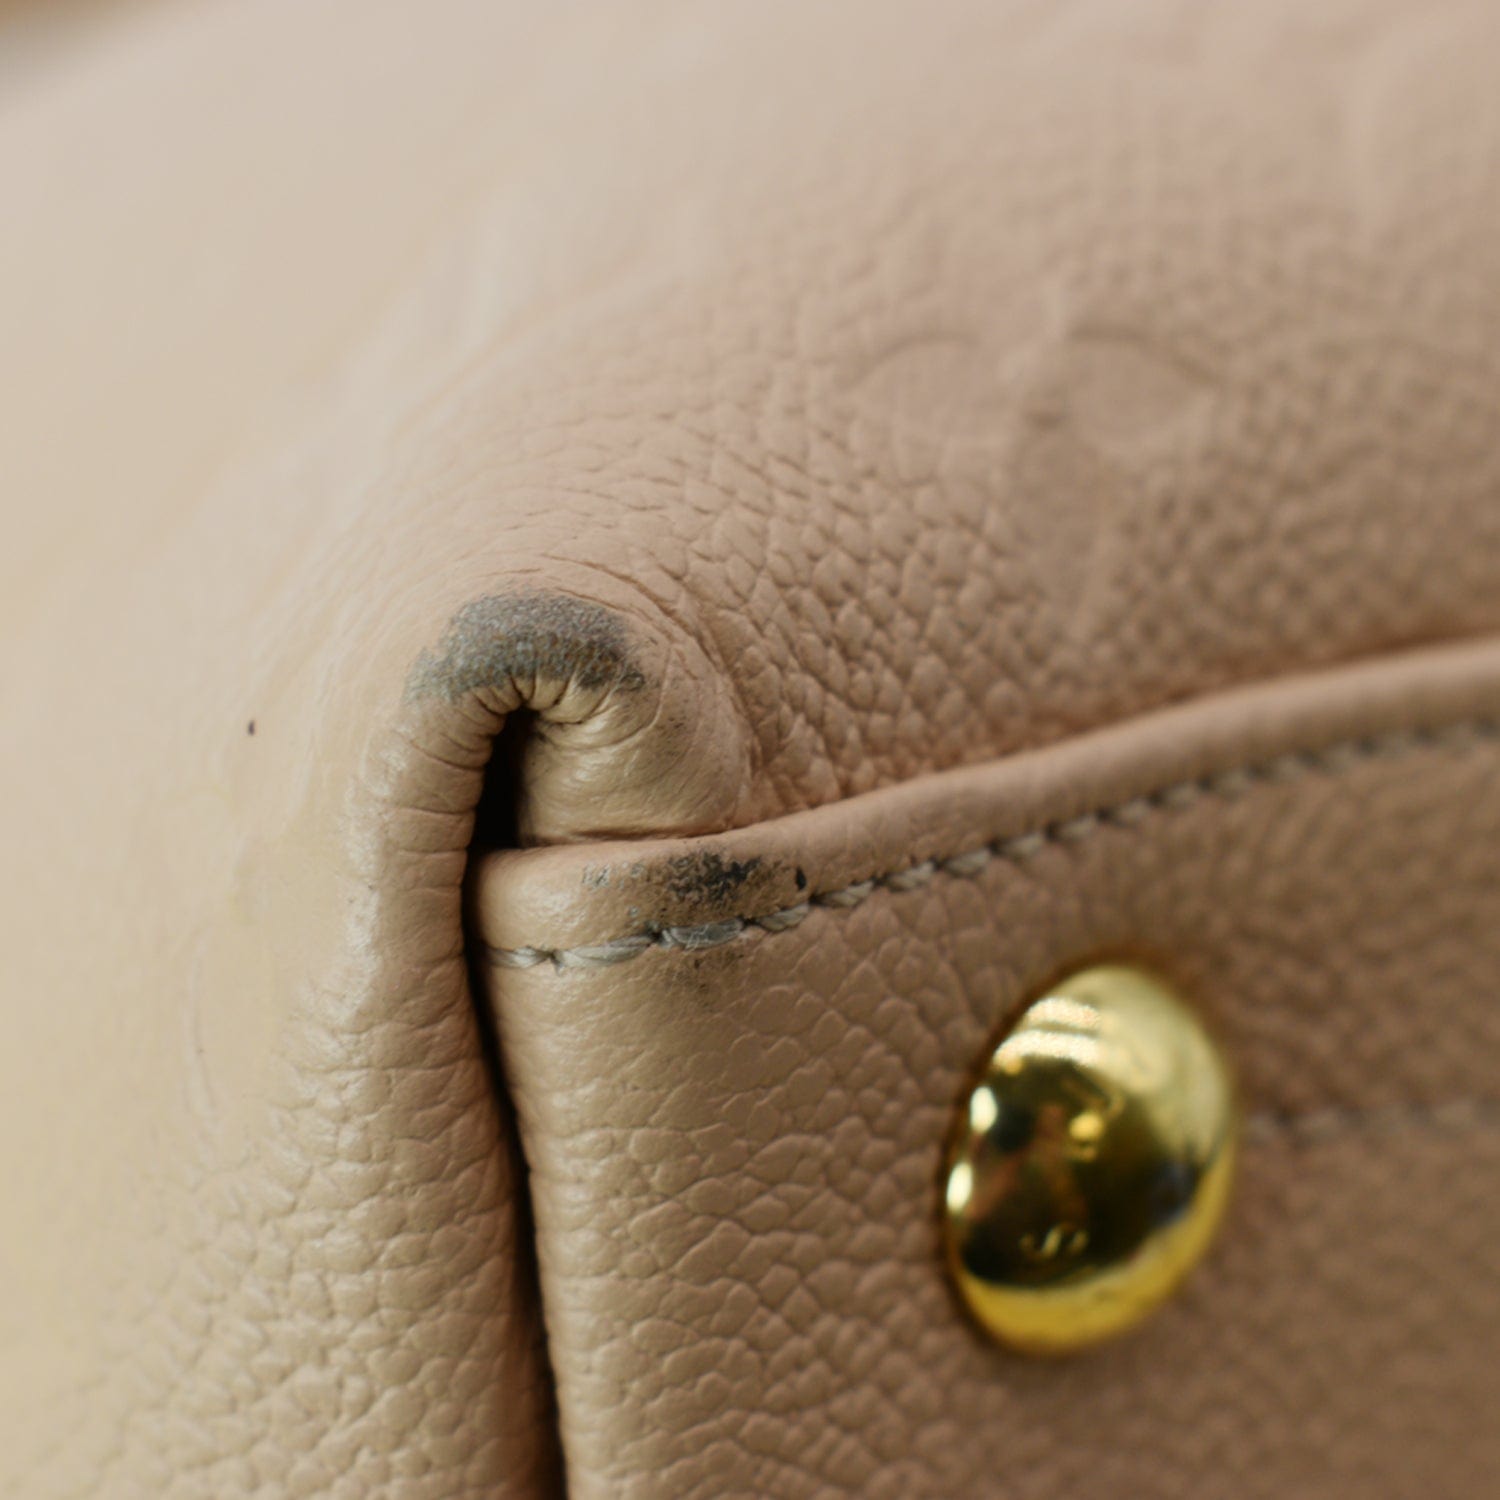 Louis Vuitton Monogram Empreinte V Tote Bag M44397